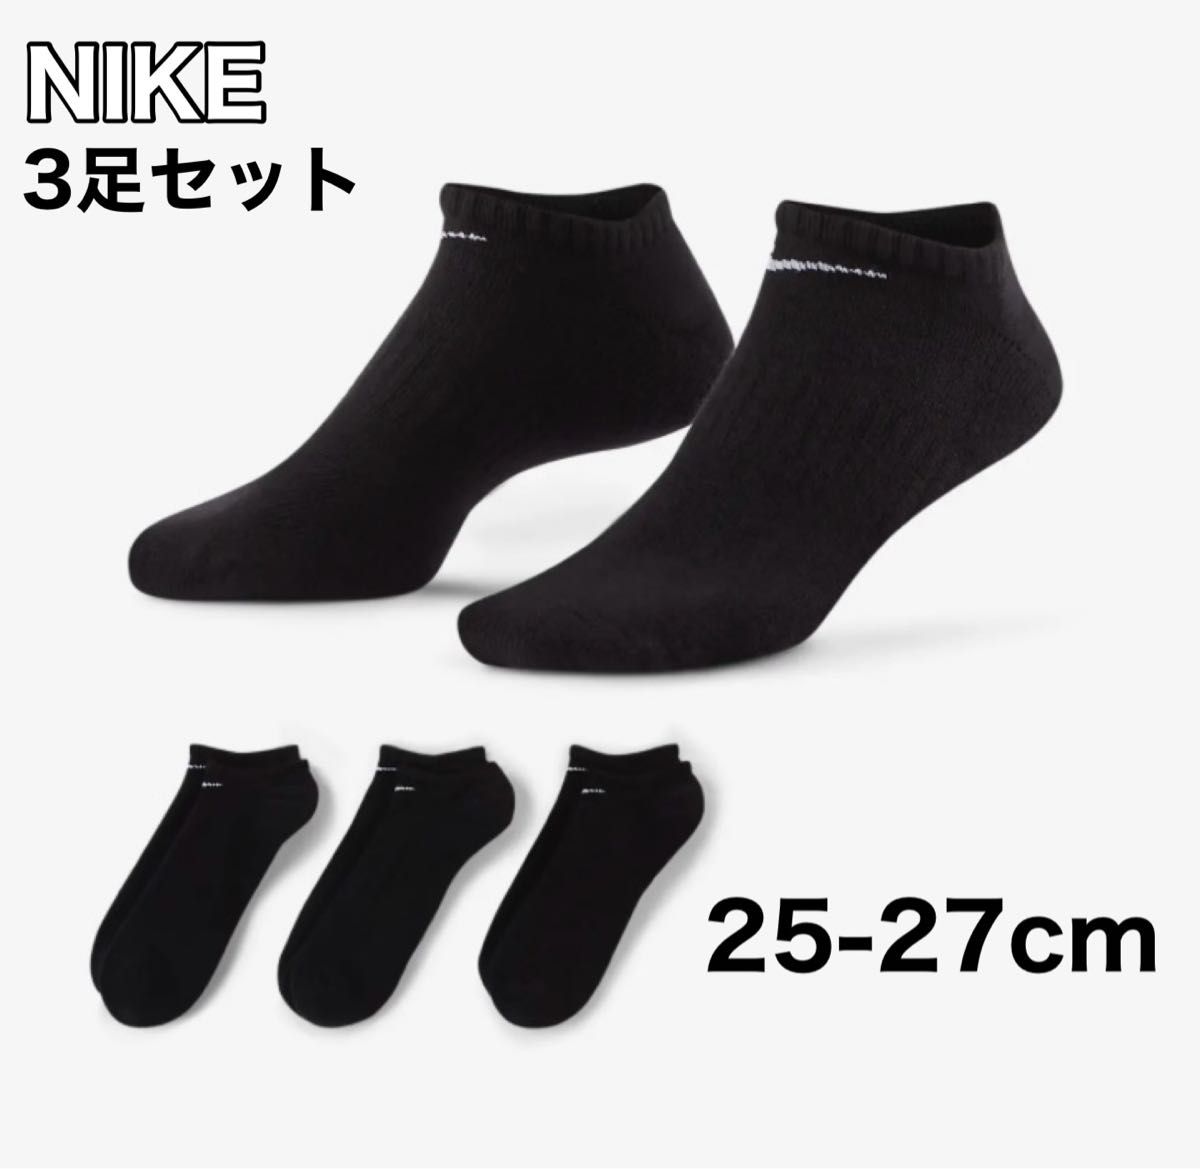 NIKE ナイキ 靴下 3足セット ブラック  ショート ソックス 黒 25-27cm